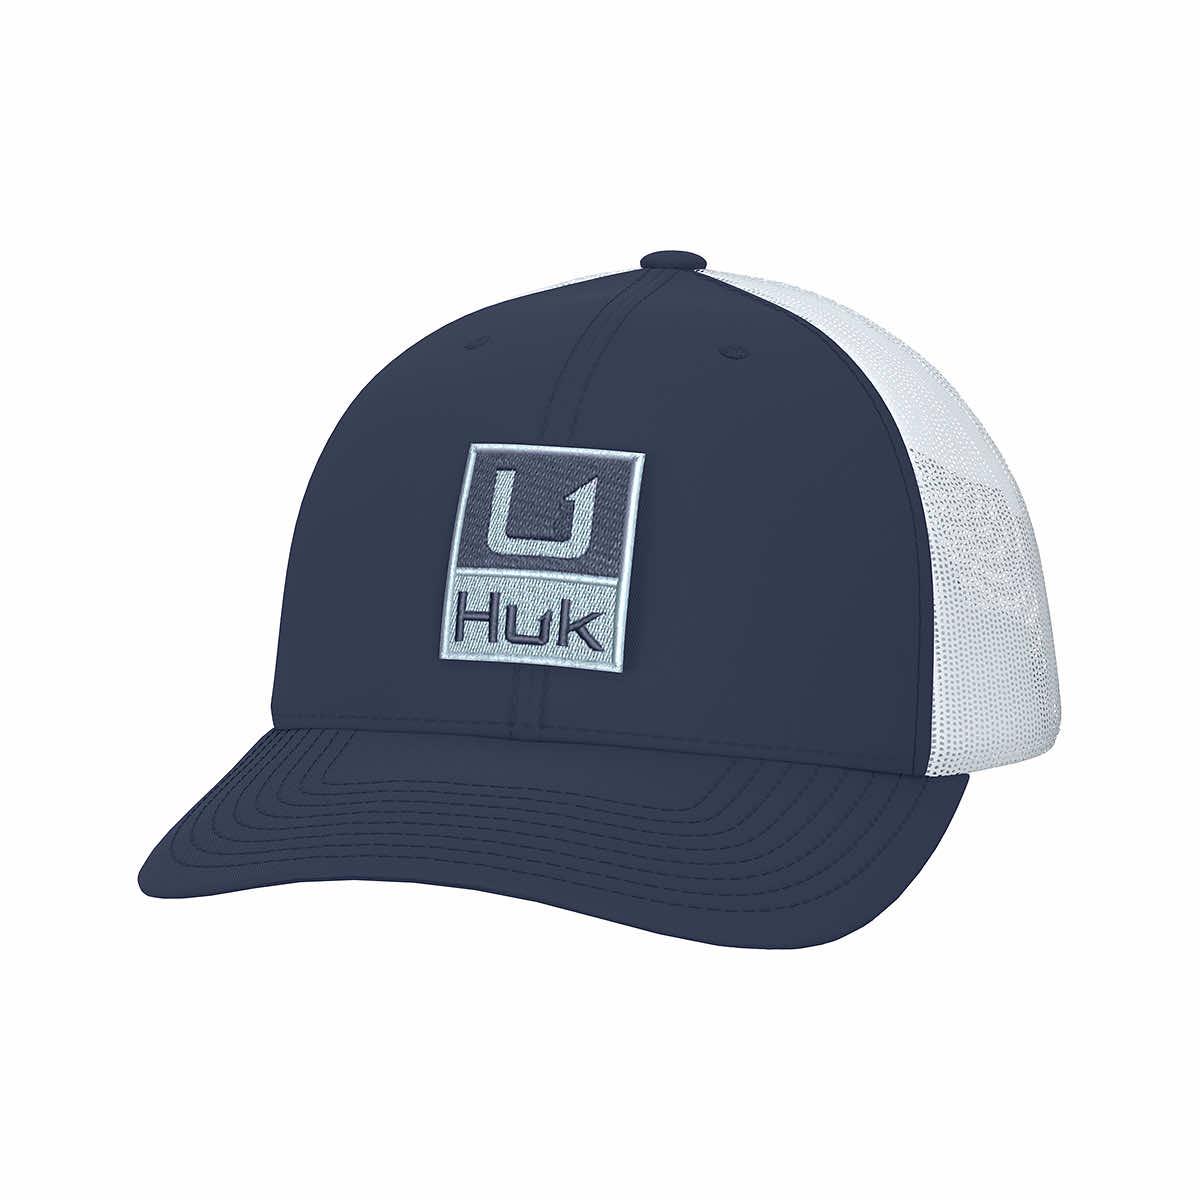 Mast General Store  Huk'd Up Trucker Hat